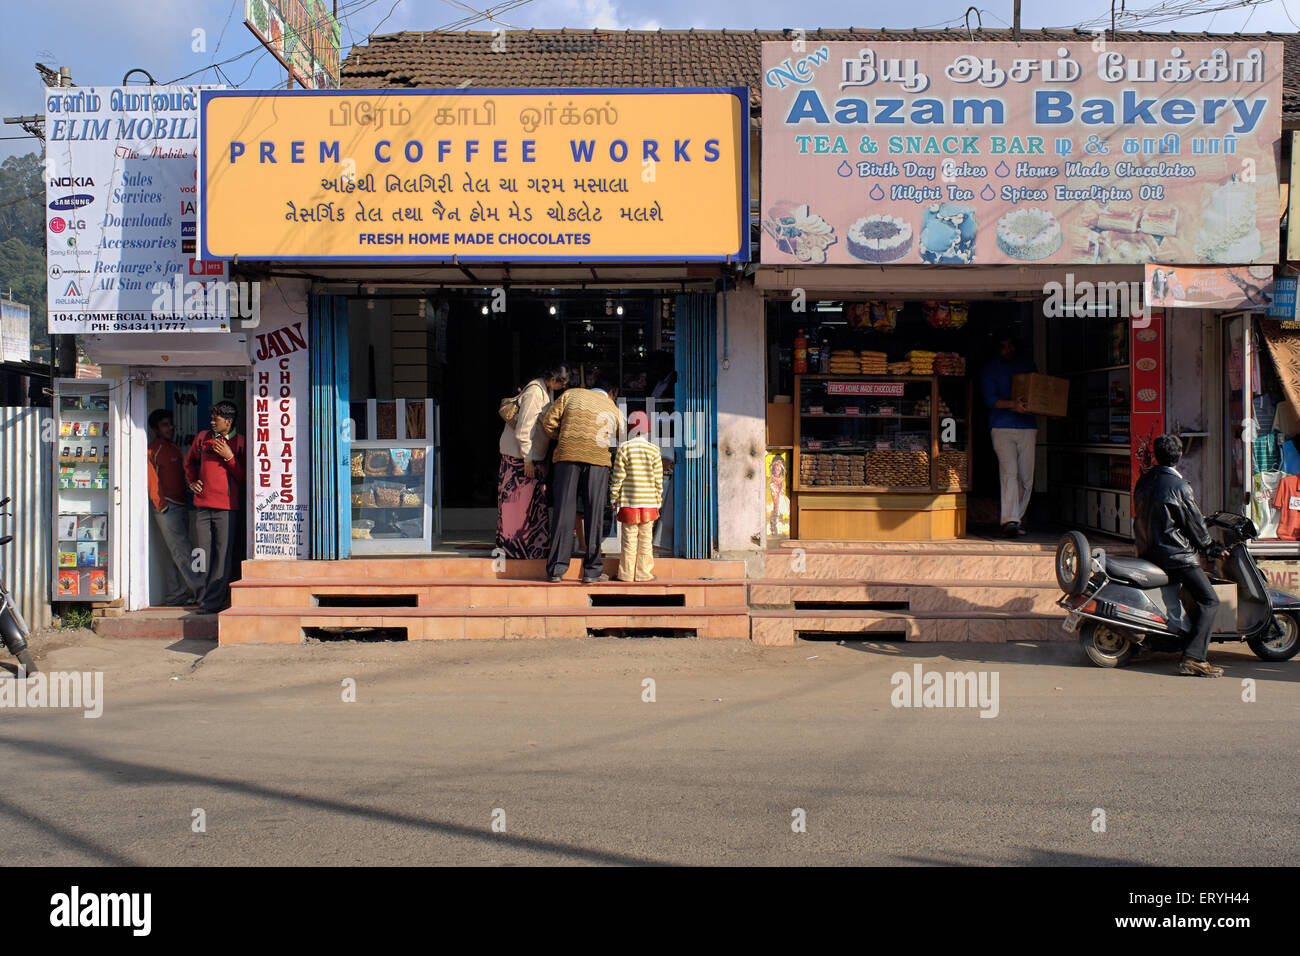 Aazam Bakery, Prem Coffee Works, Ooty, Udagamandalam, Nilgiris, Tamil Nadu, India, Asia Stock Photo